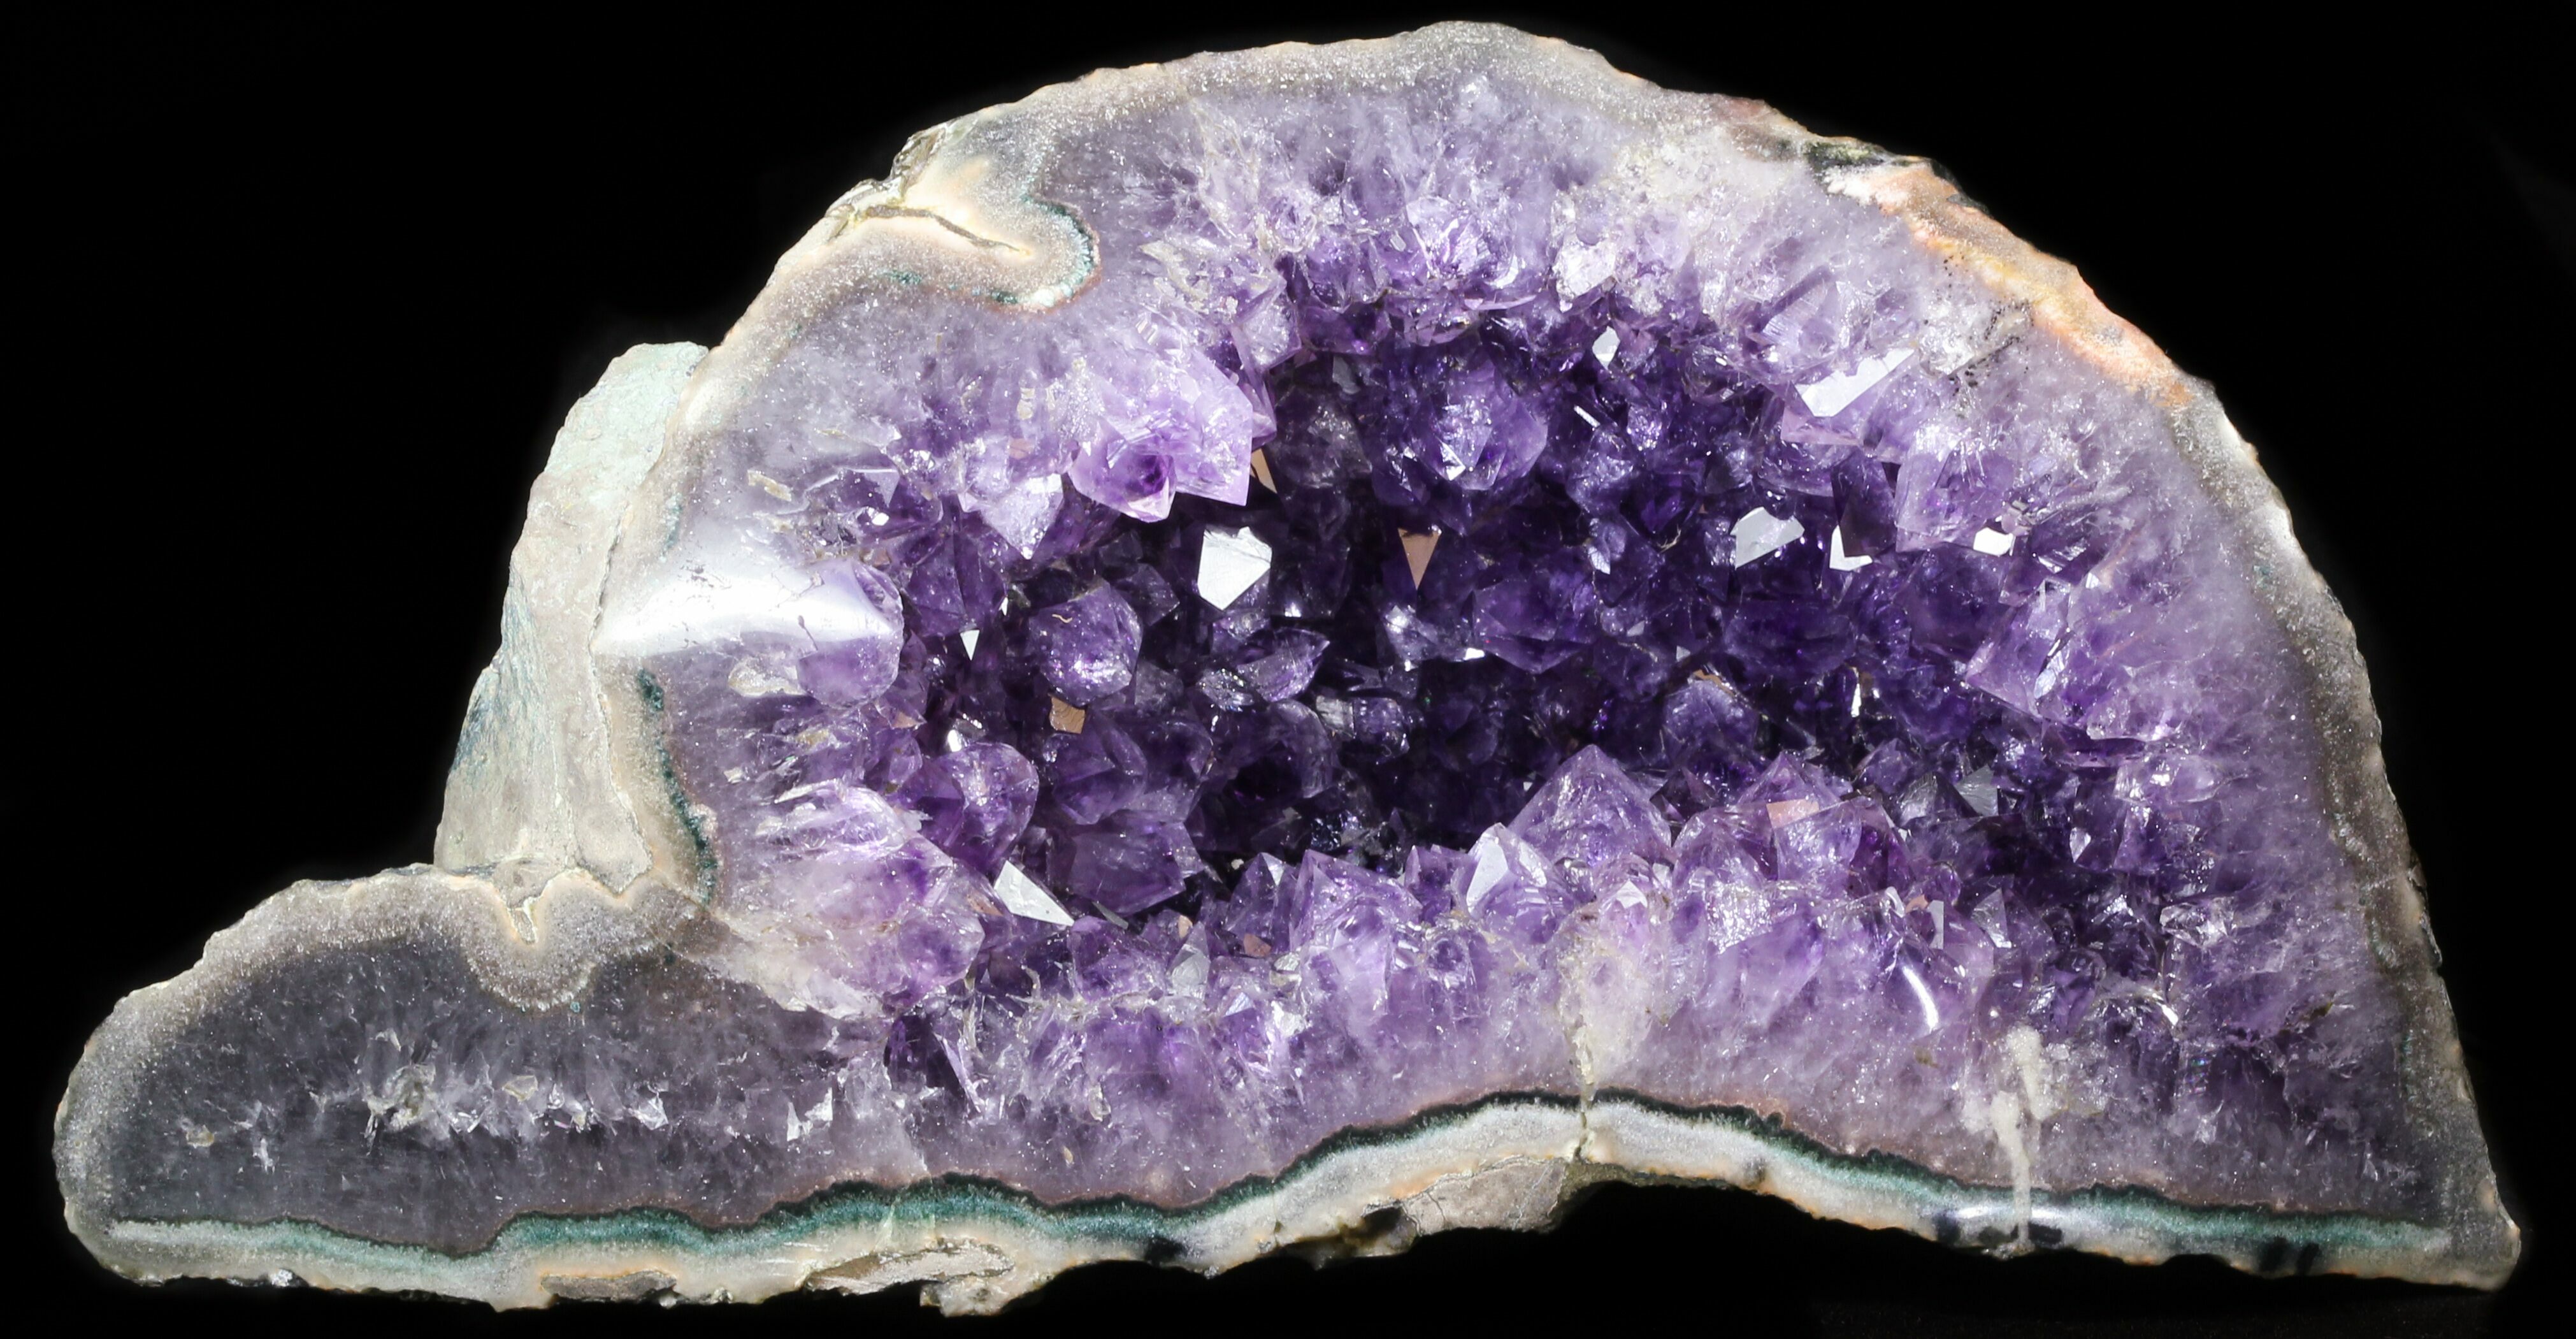 8" Gorgeous Dark Amethyst Geode - Uruguay For Sale (#30906) - FossilEra.com